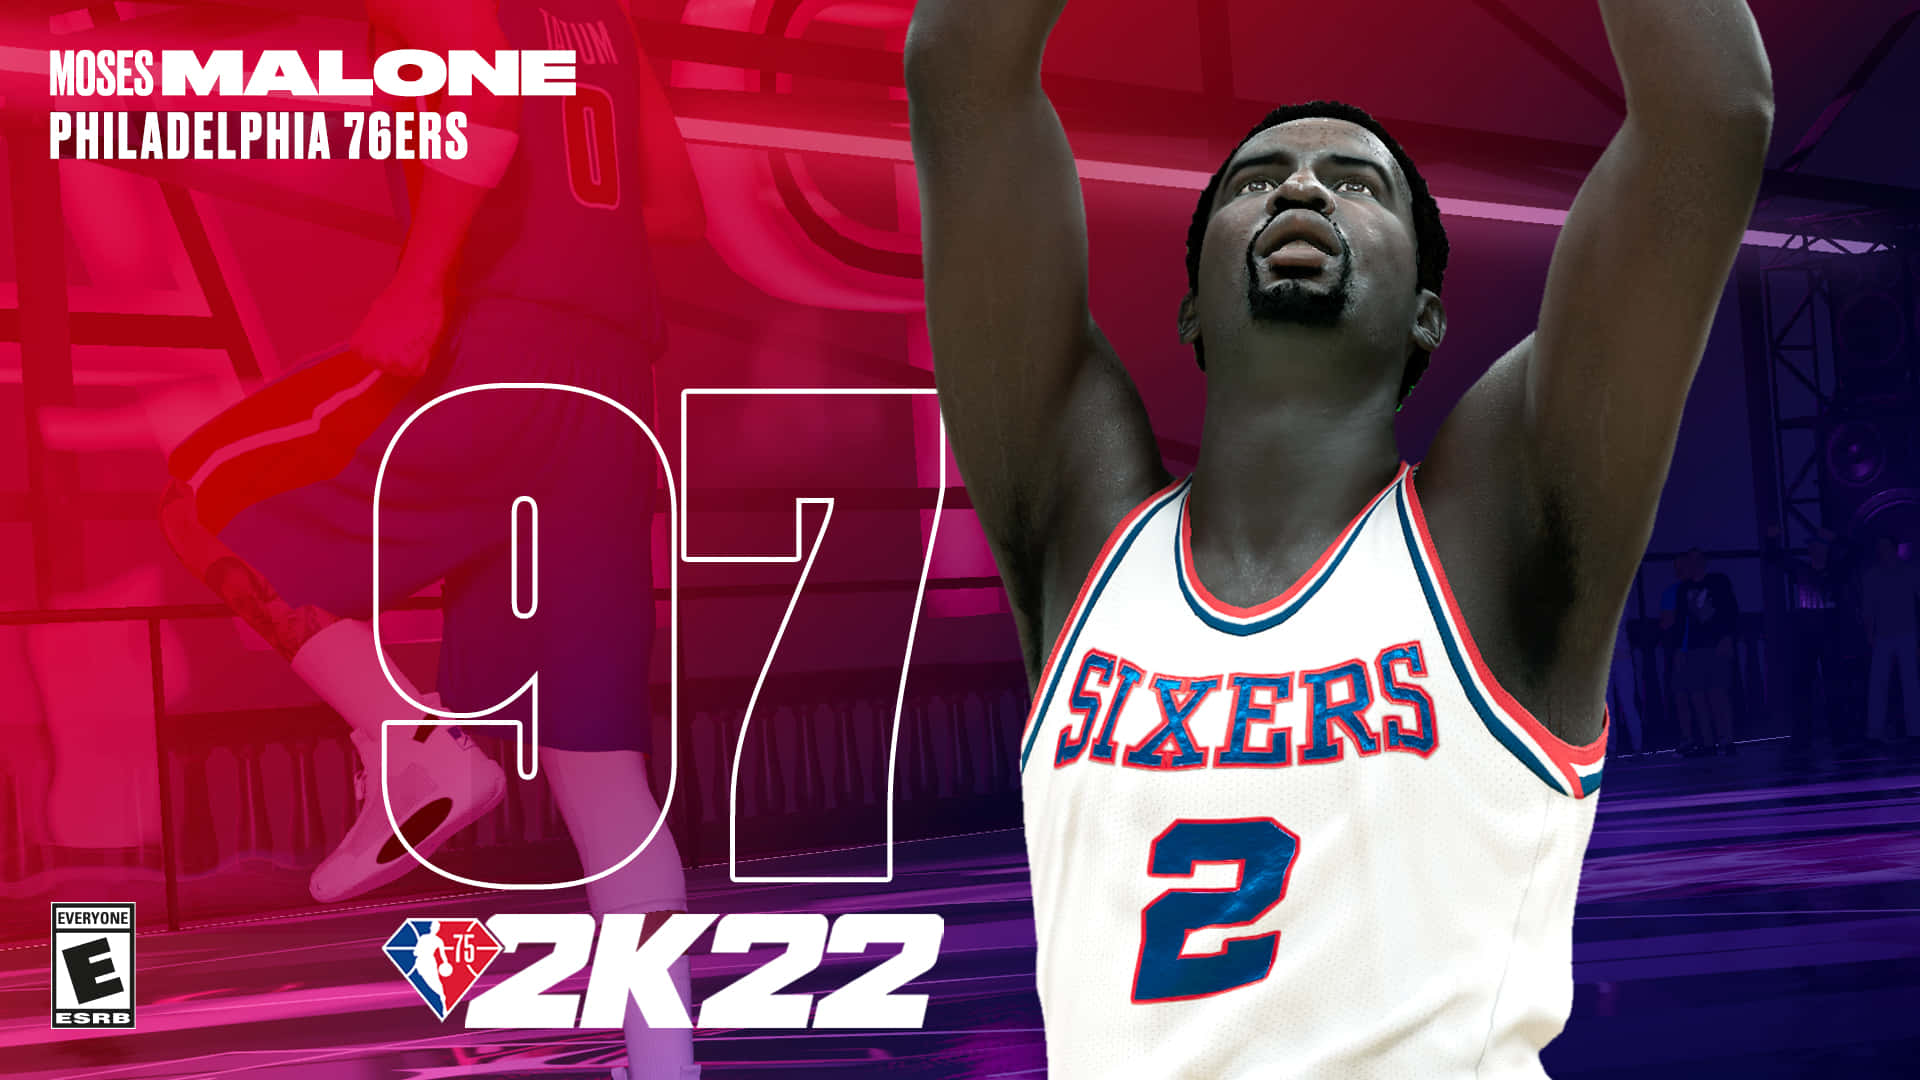 Moses Malone 2022 Basketball Game Wallpaper